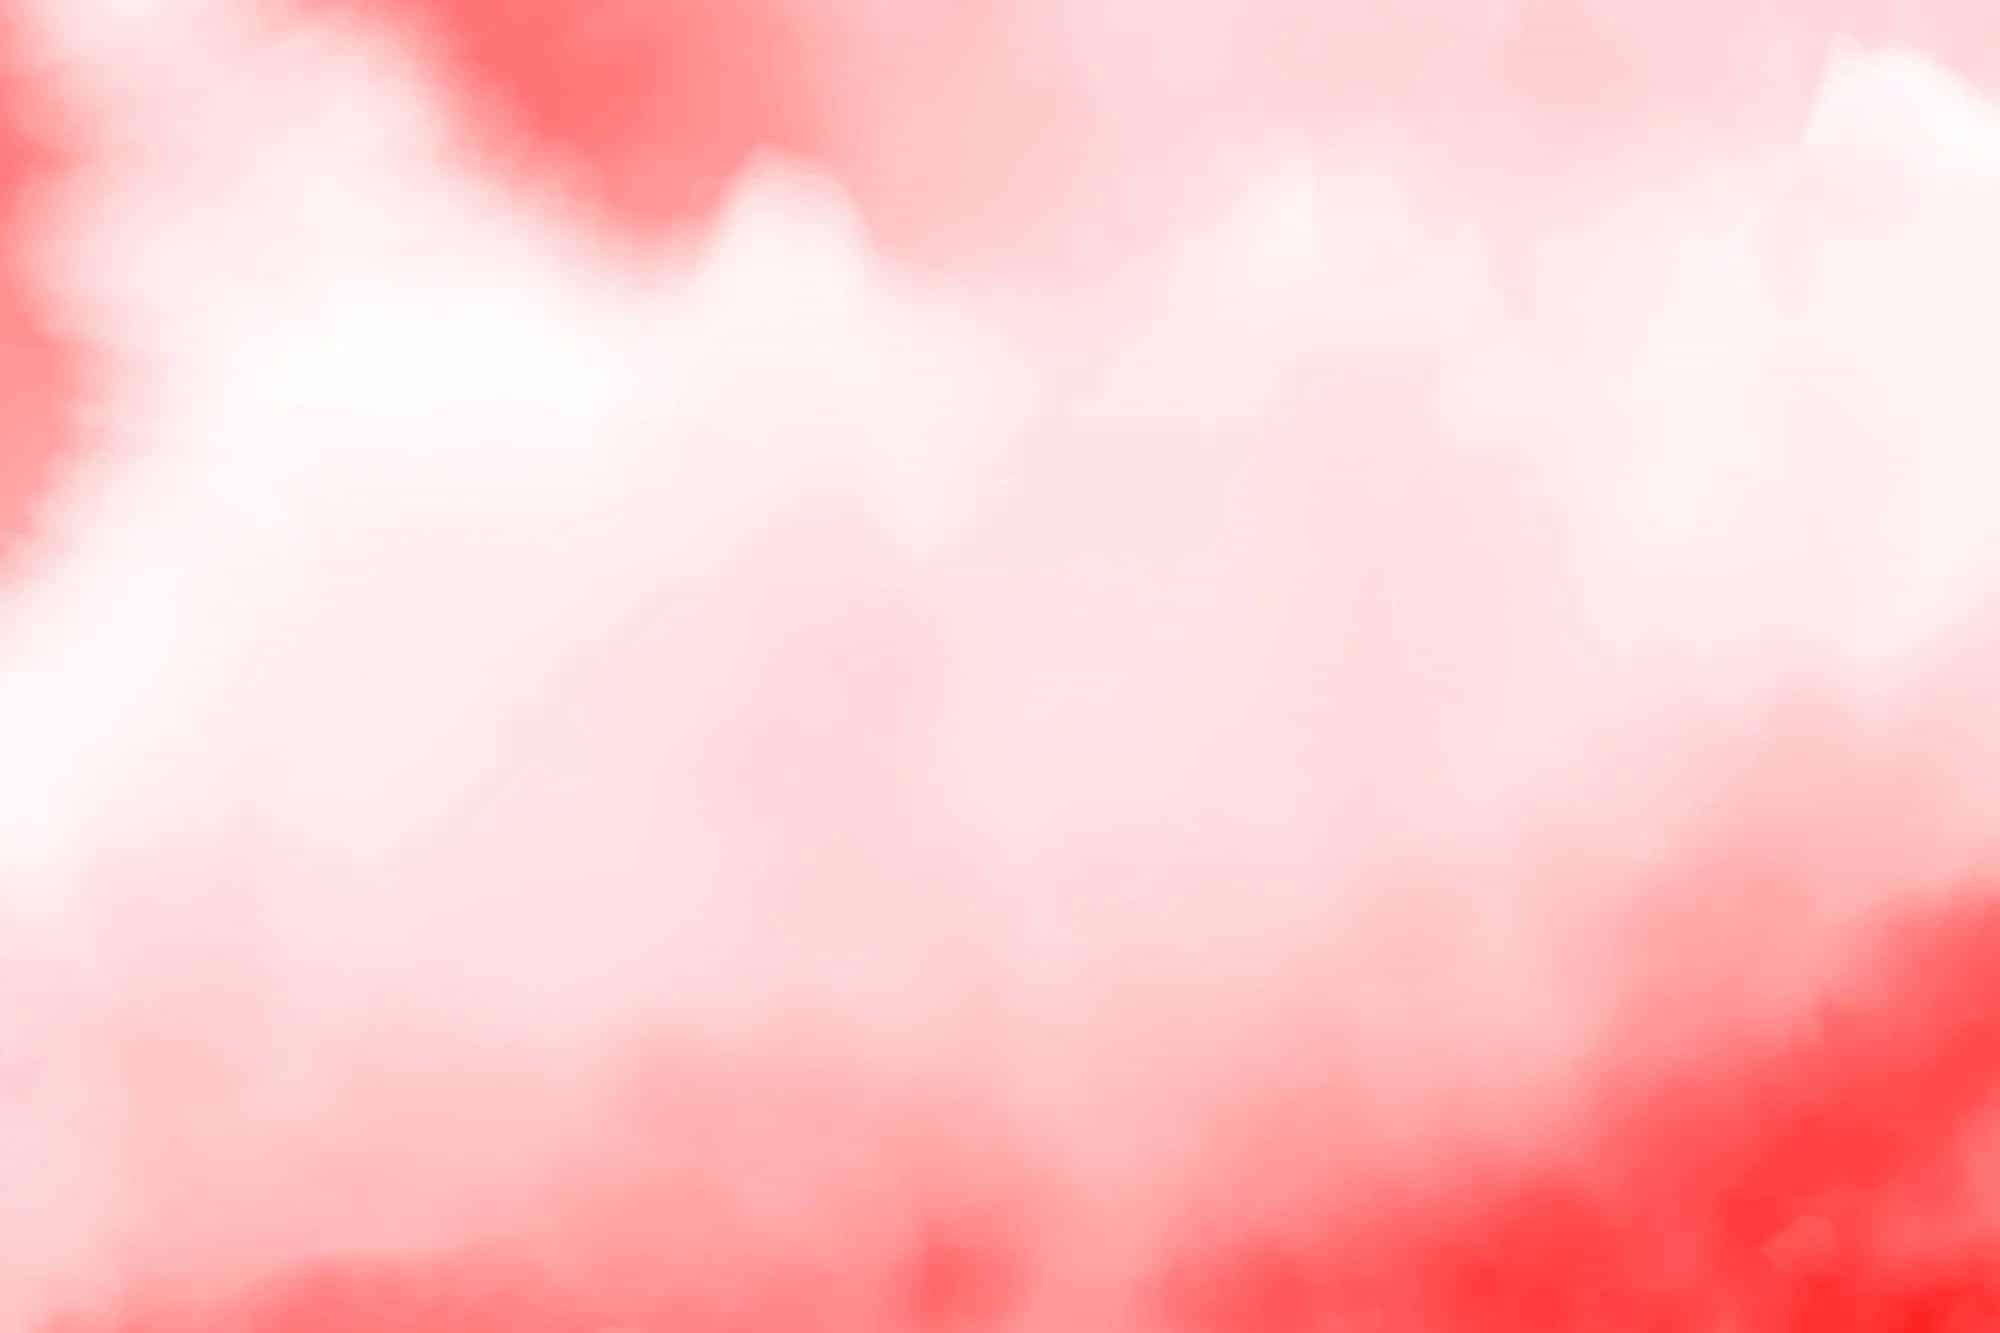 red watercolor splash background 70155 337 min